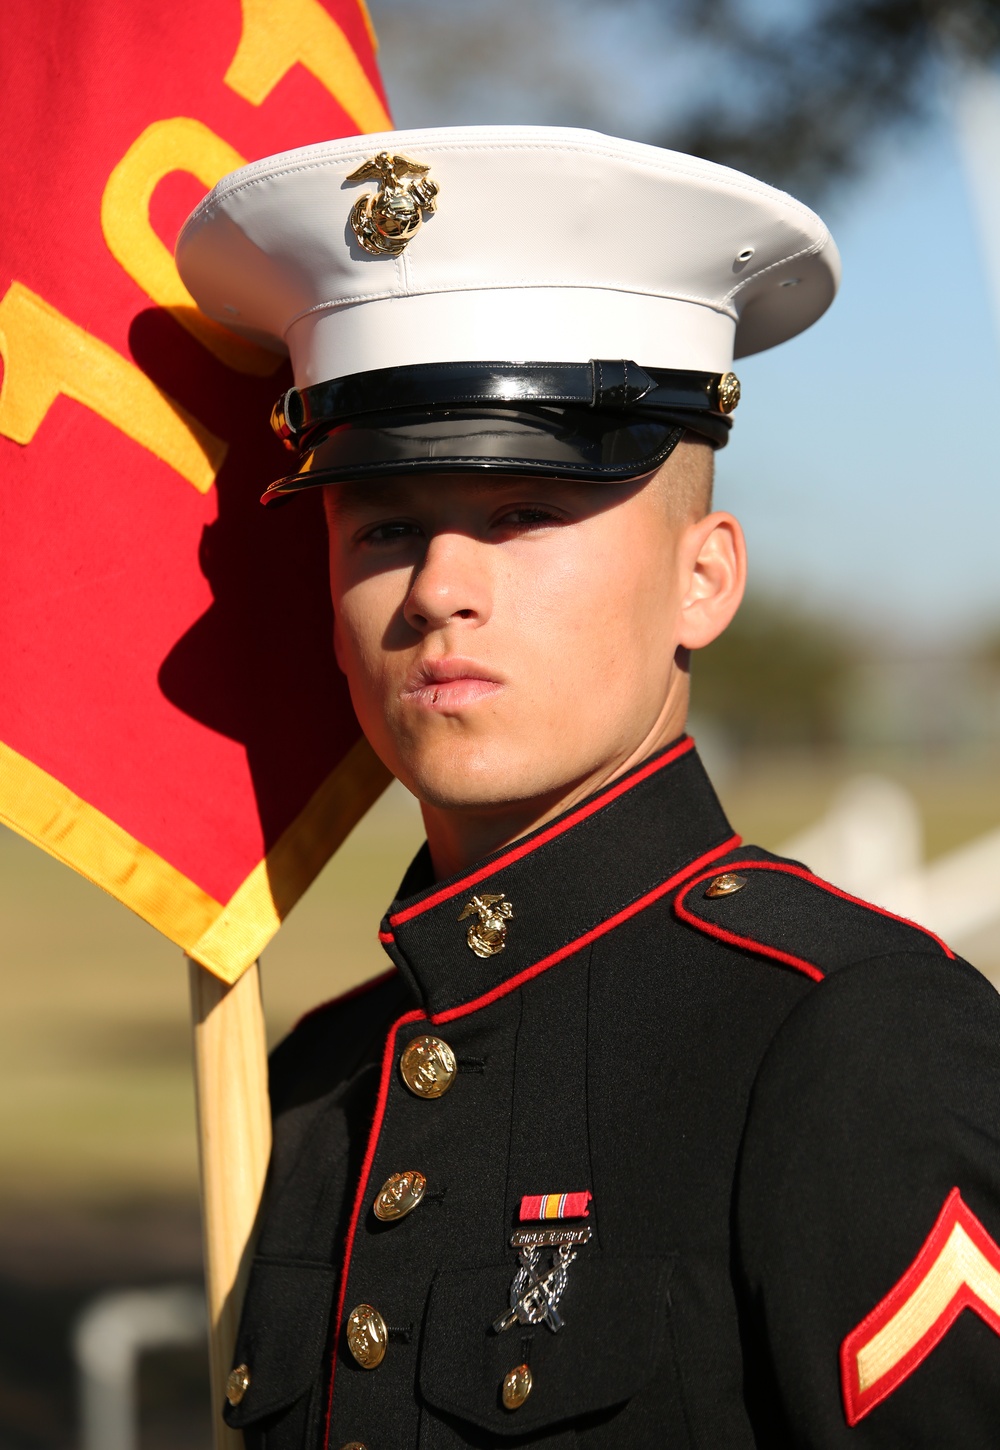 Photo Gallery: New Marines graduate recruit training on Parris Island